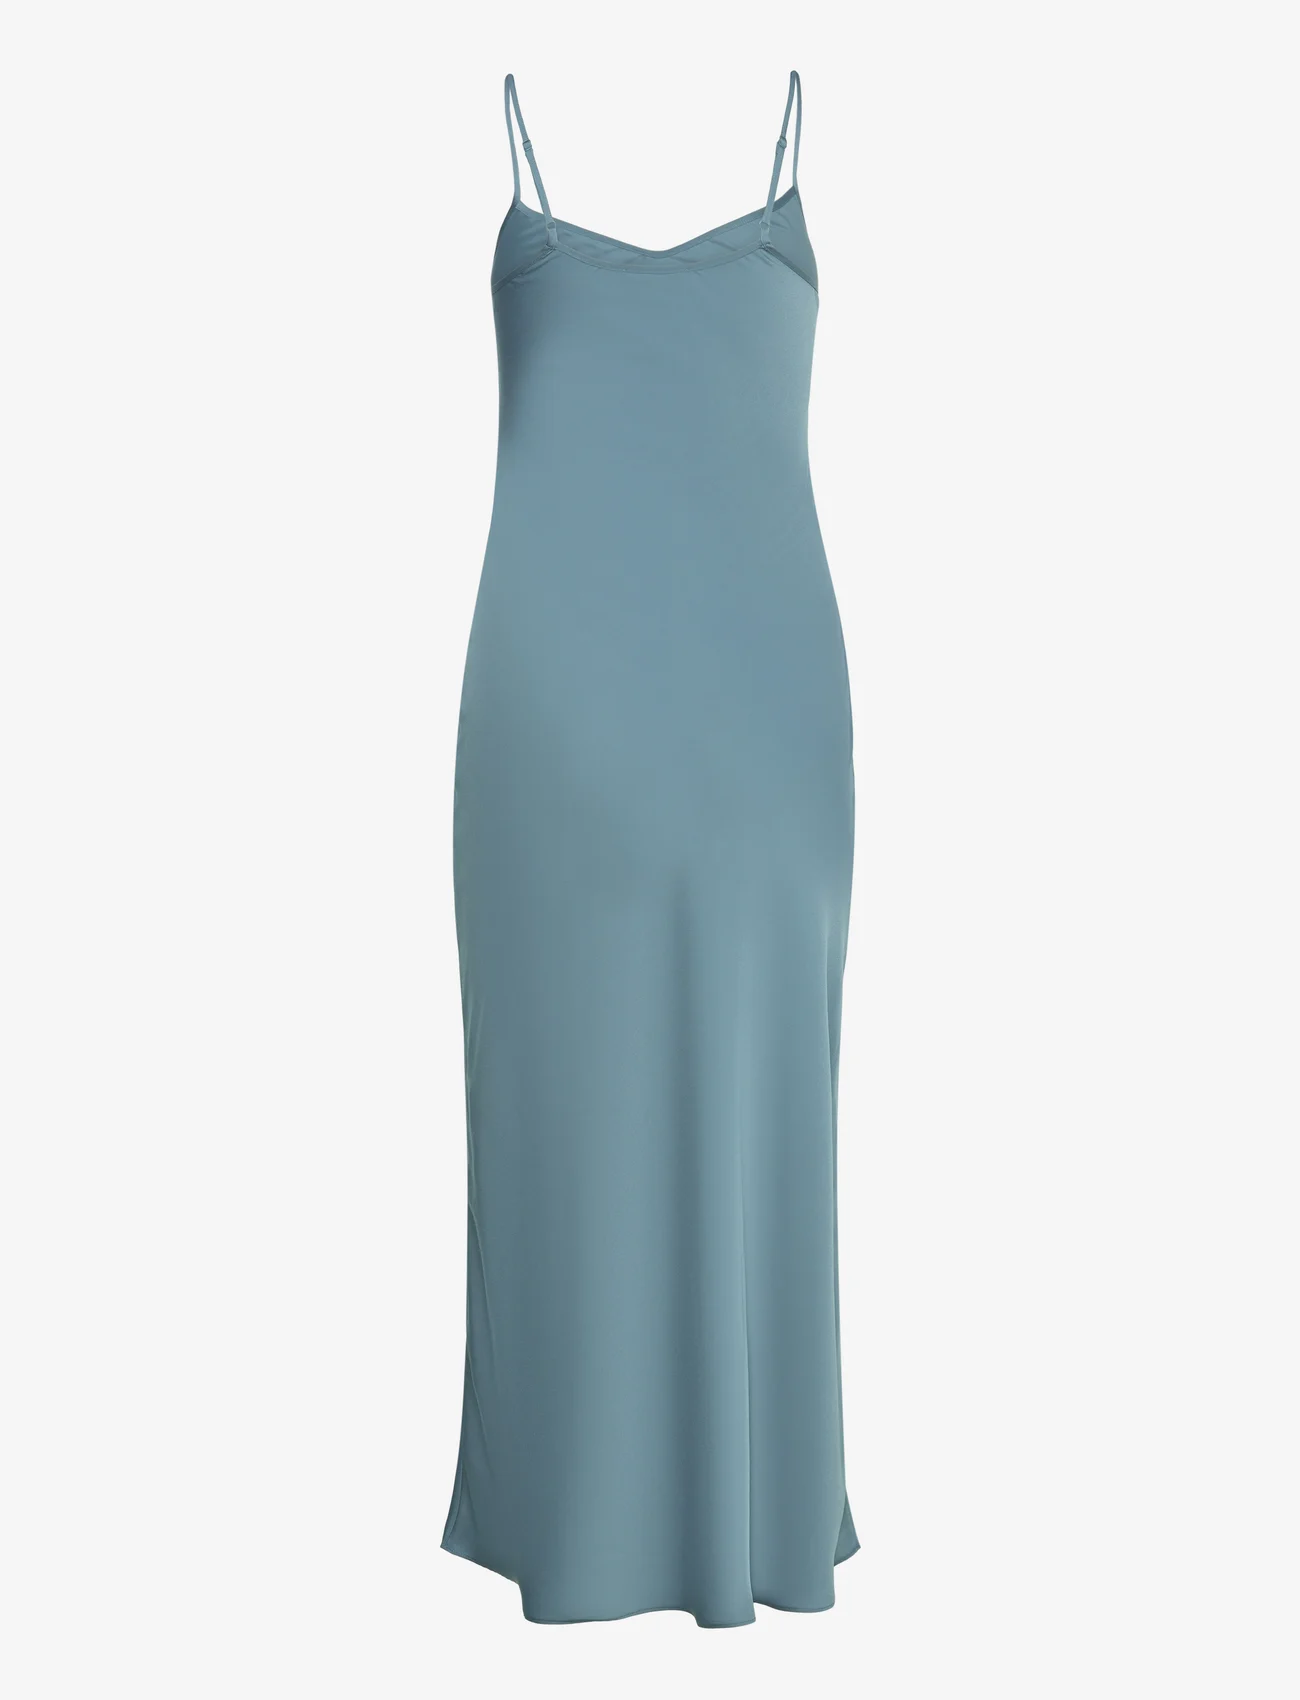 AllSaints - BRYONY DRESS - slip dresses - petrol blue - 1